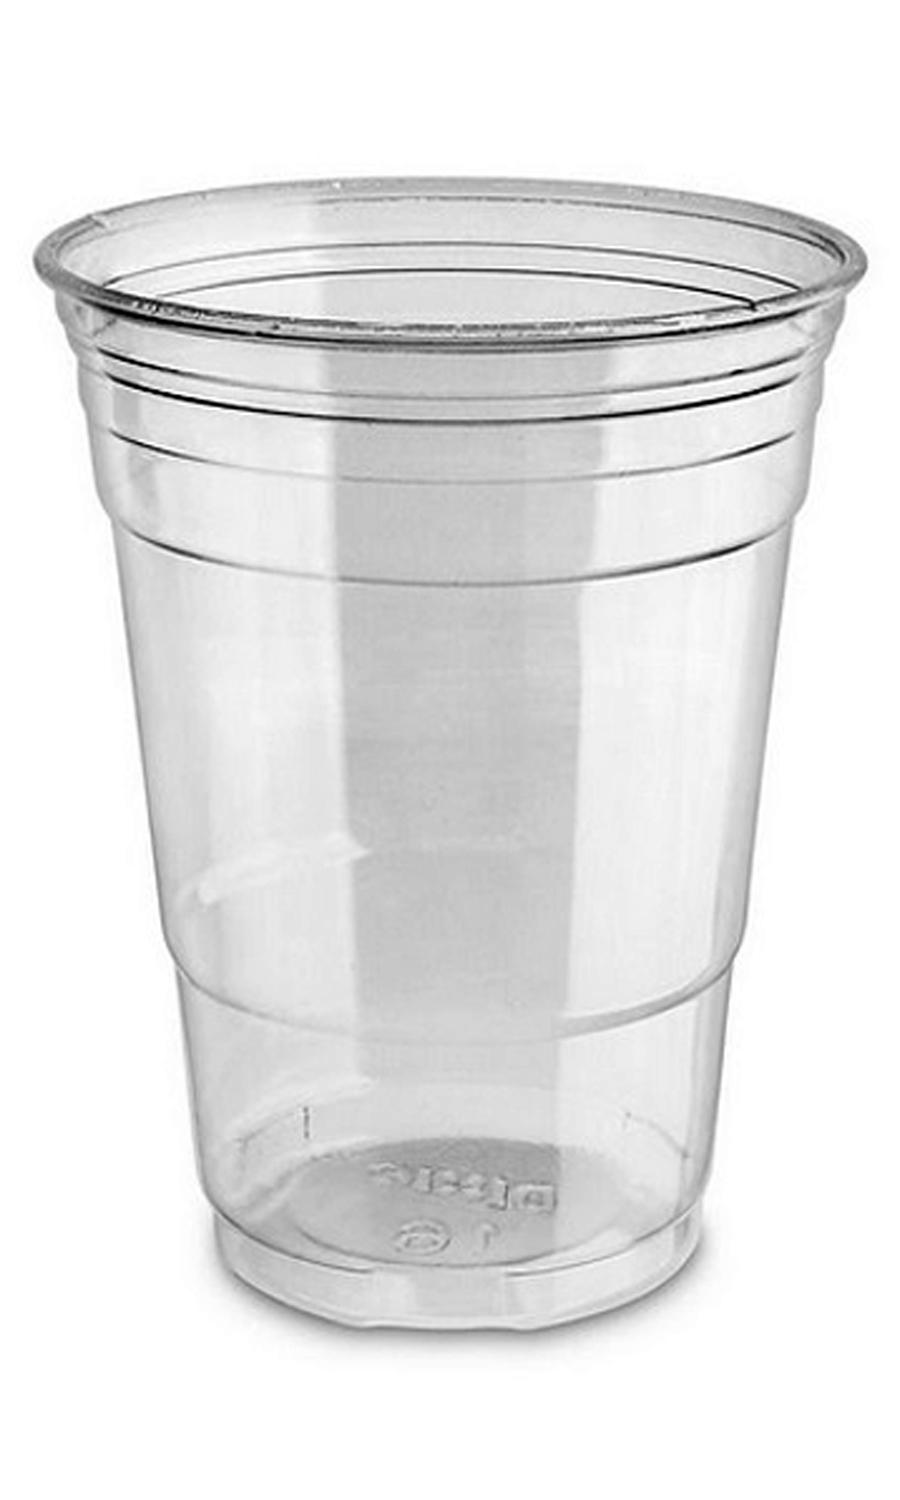 7 Ounce Plastic Cups | Water Cooler Cups | Aquaverve